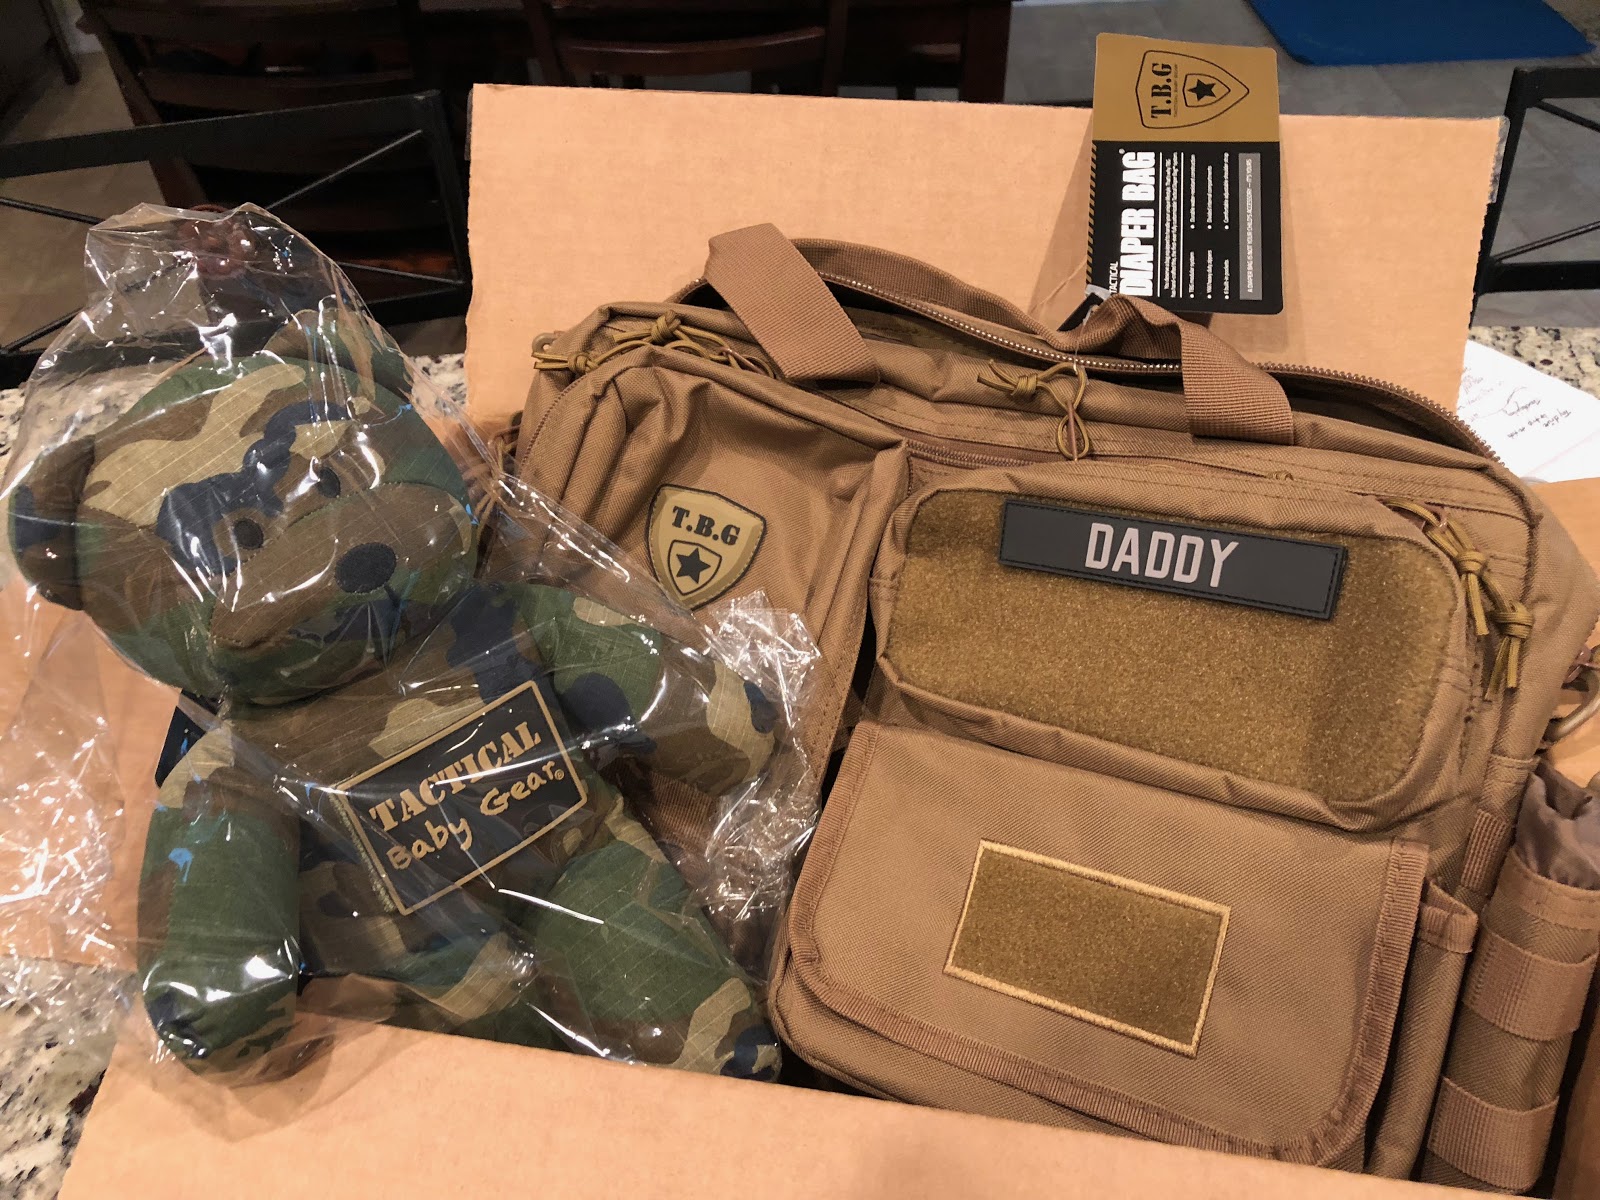 Tactical Baby Gear's Tactical Teddy